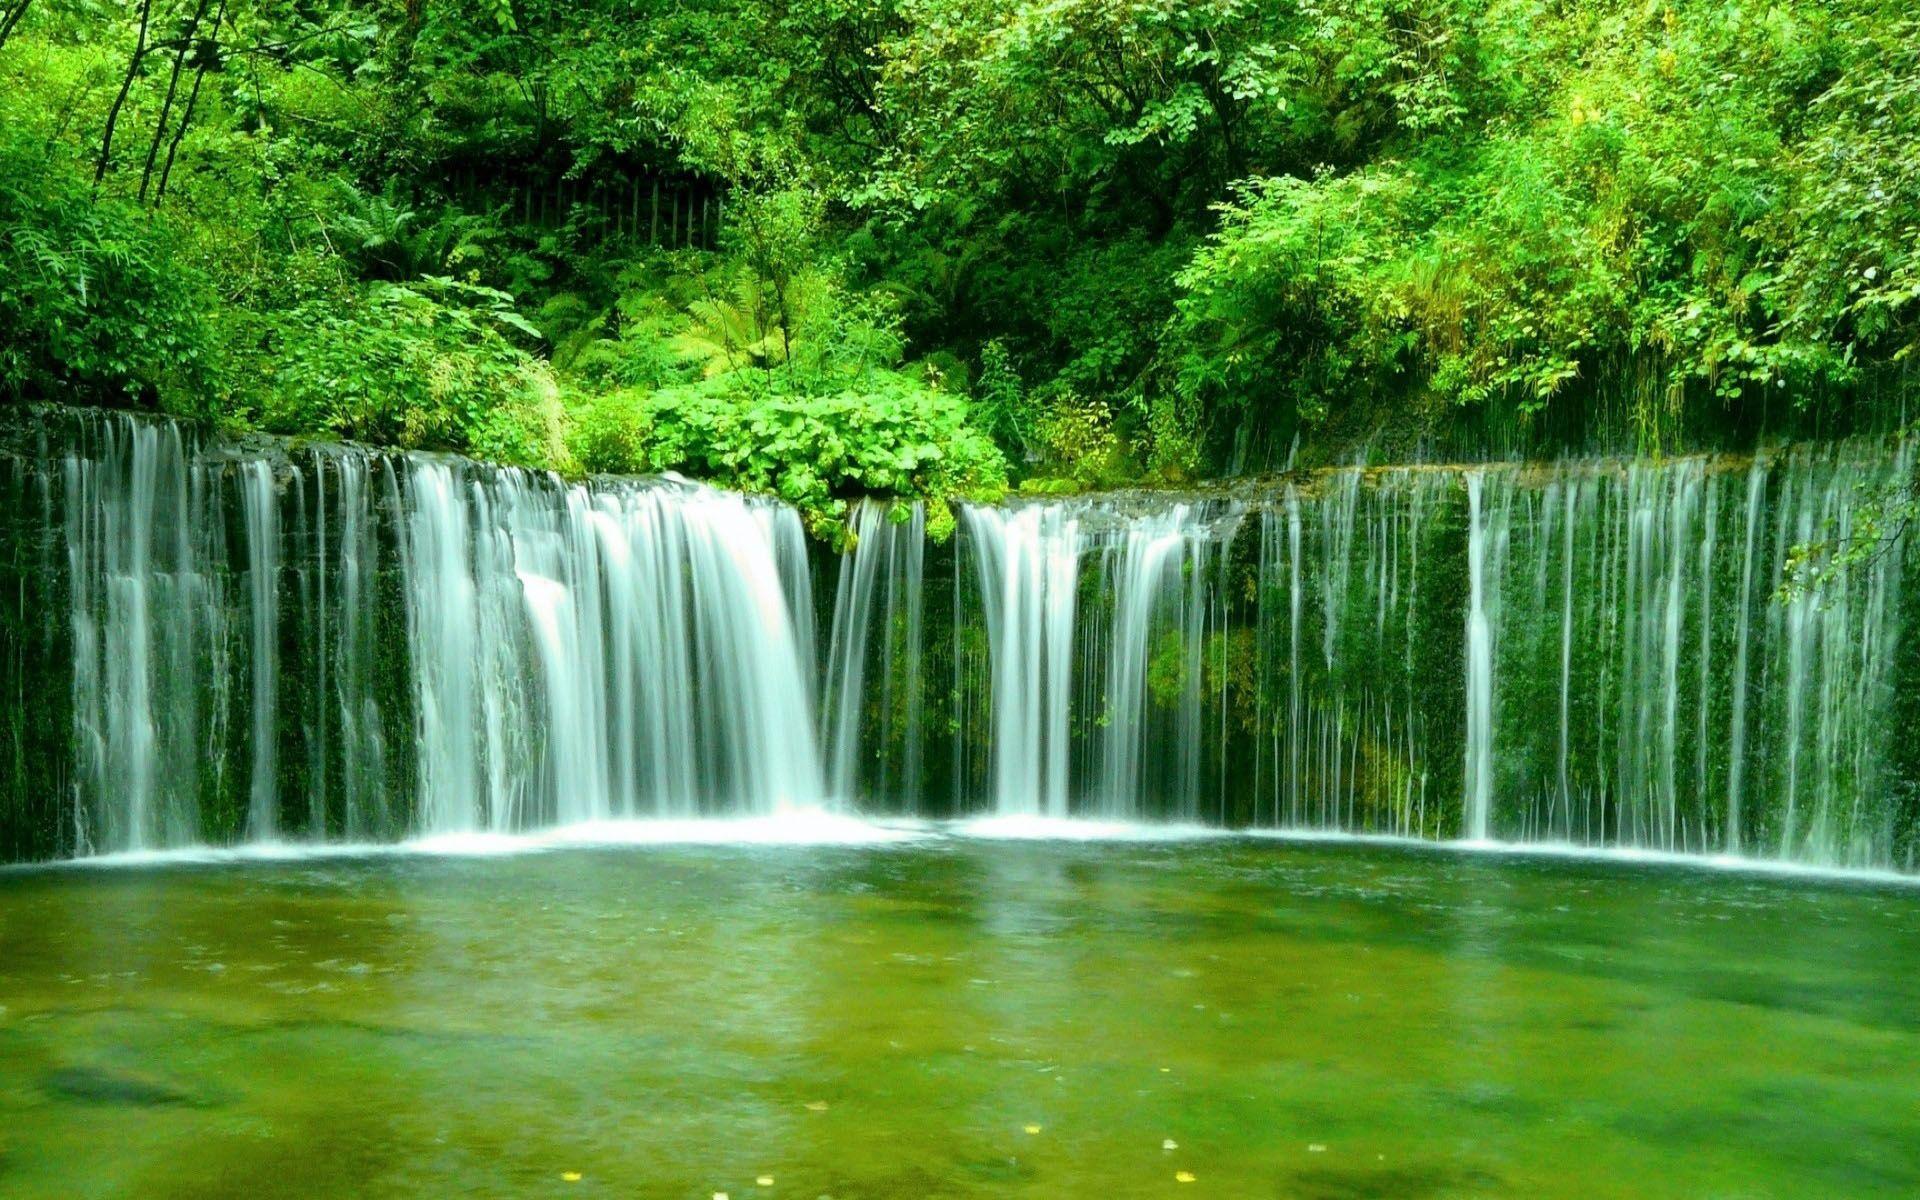 scenery waterfall